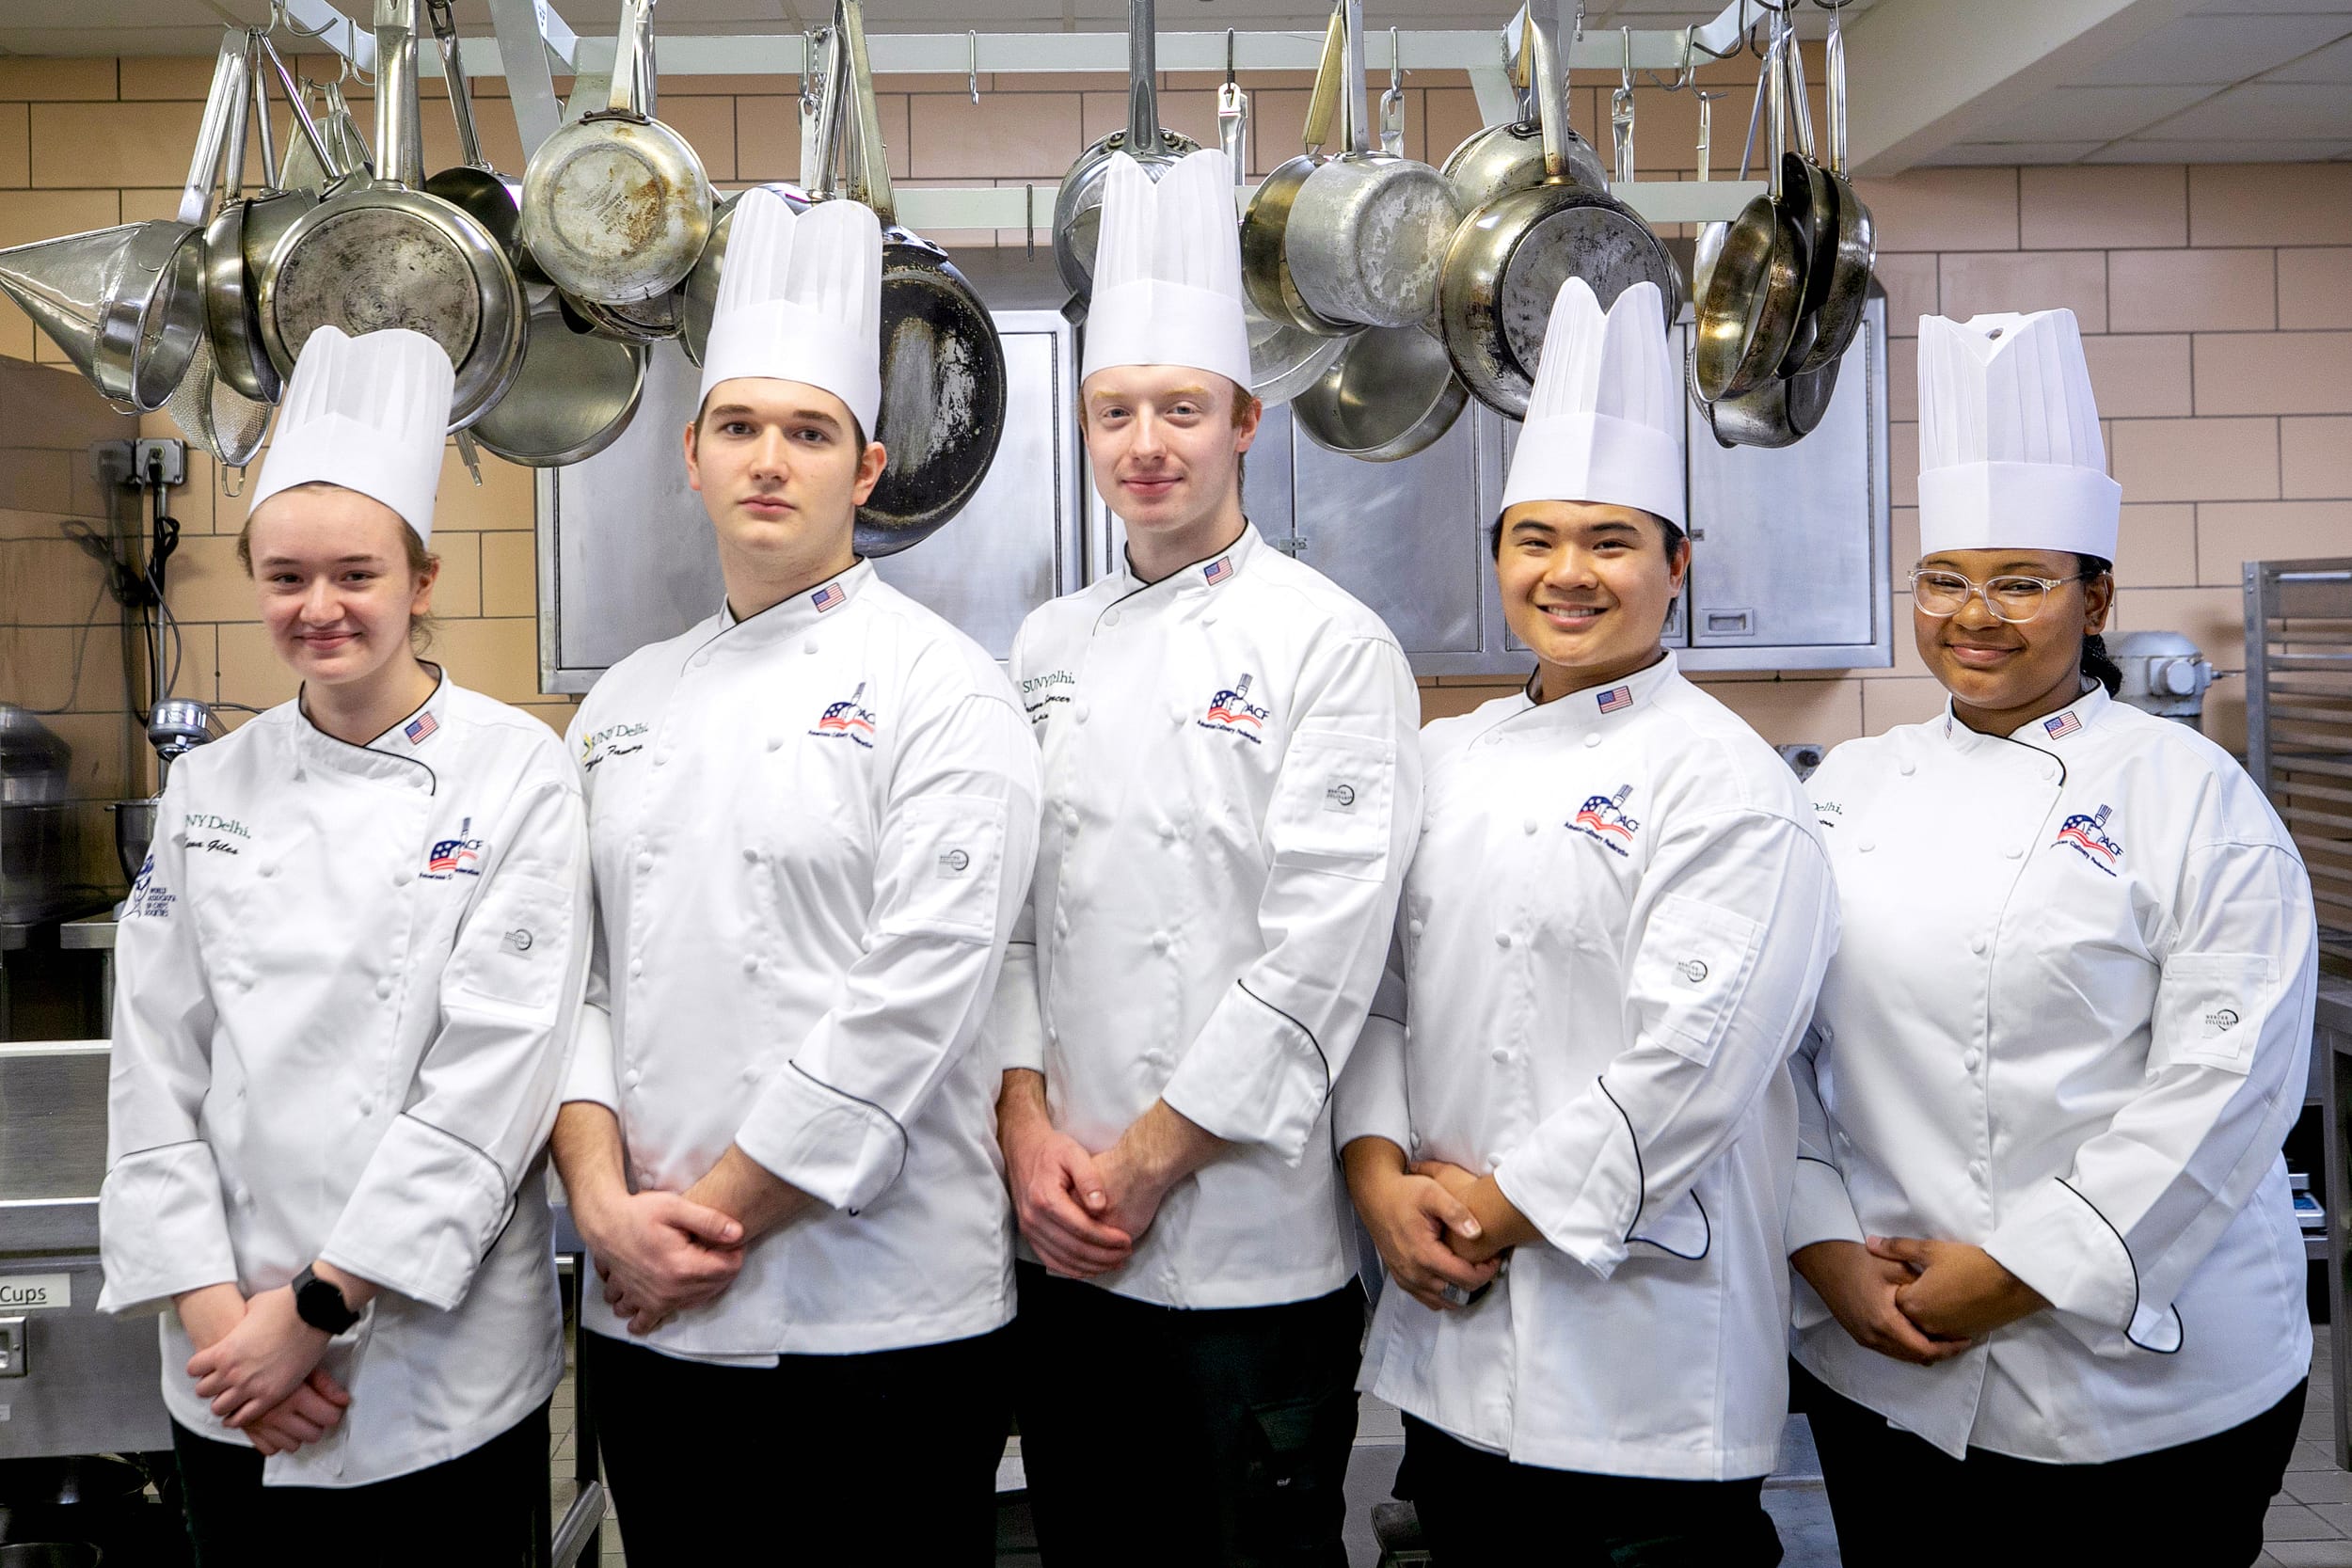 American Culinary Federation (ACF) Student Team